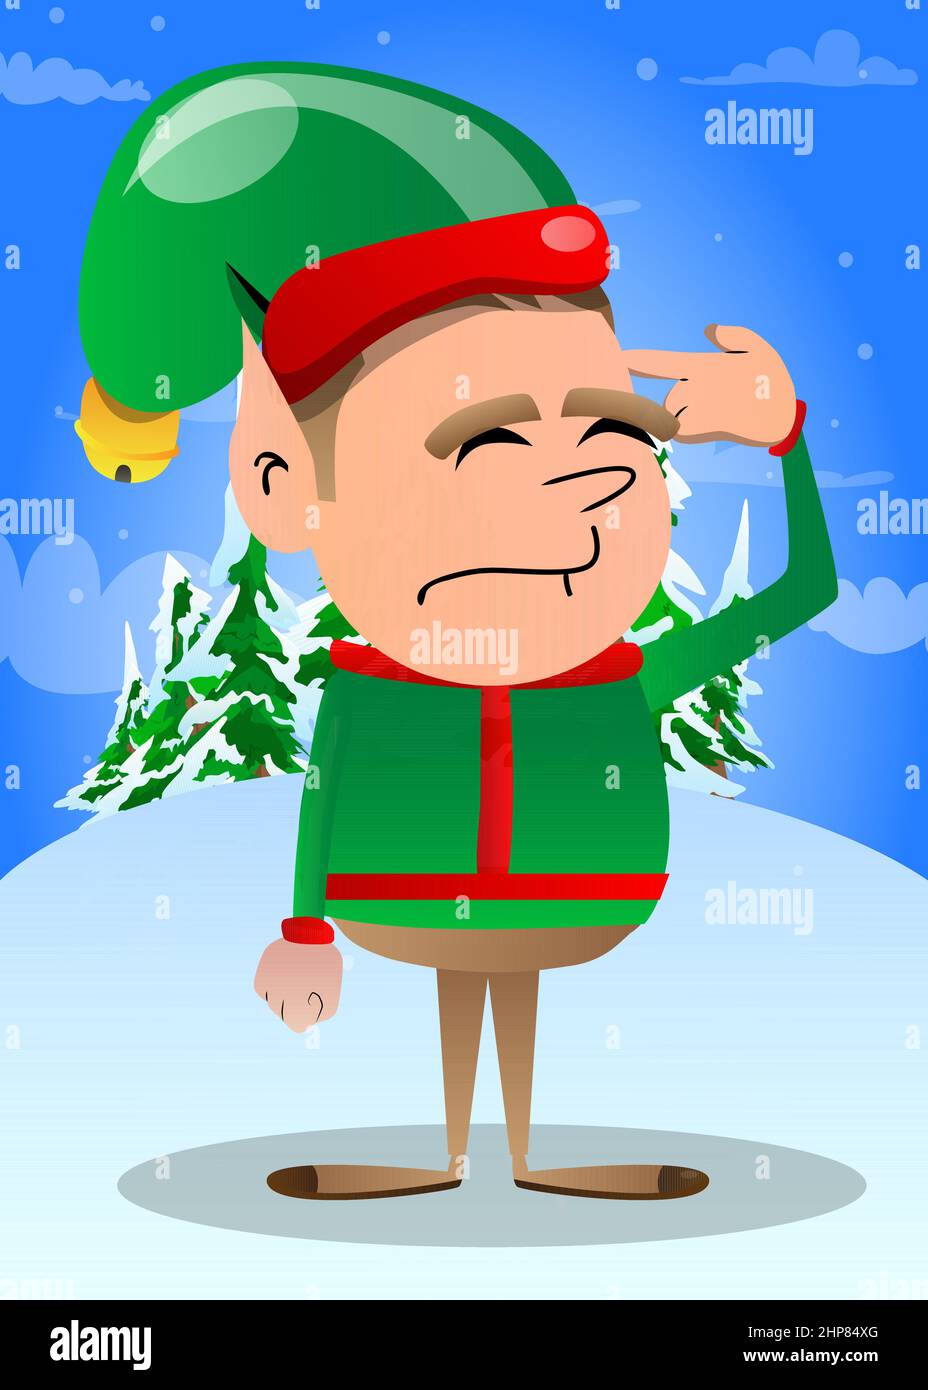 Christmas Elf putting an imaginary gun to his head. Stock Vector